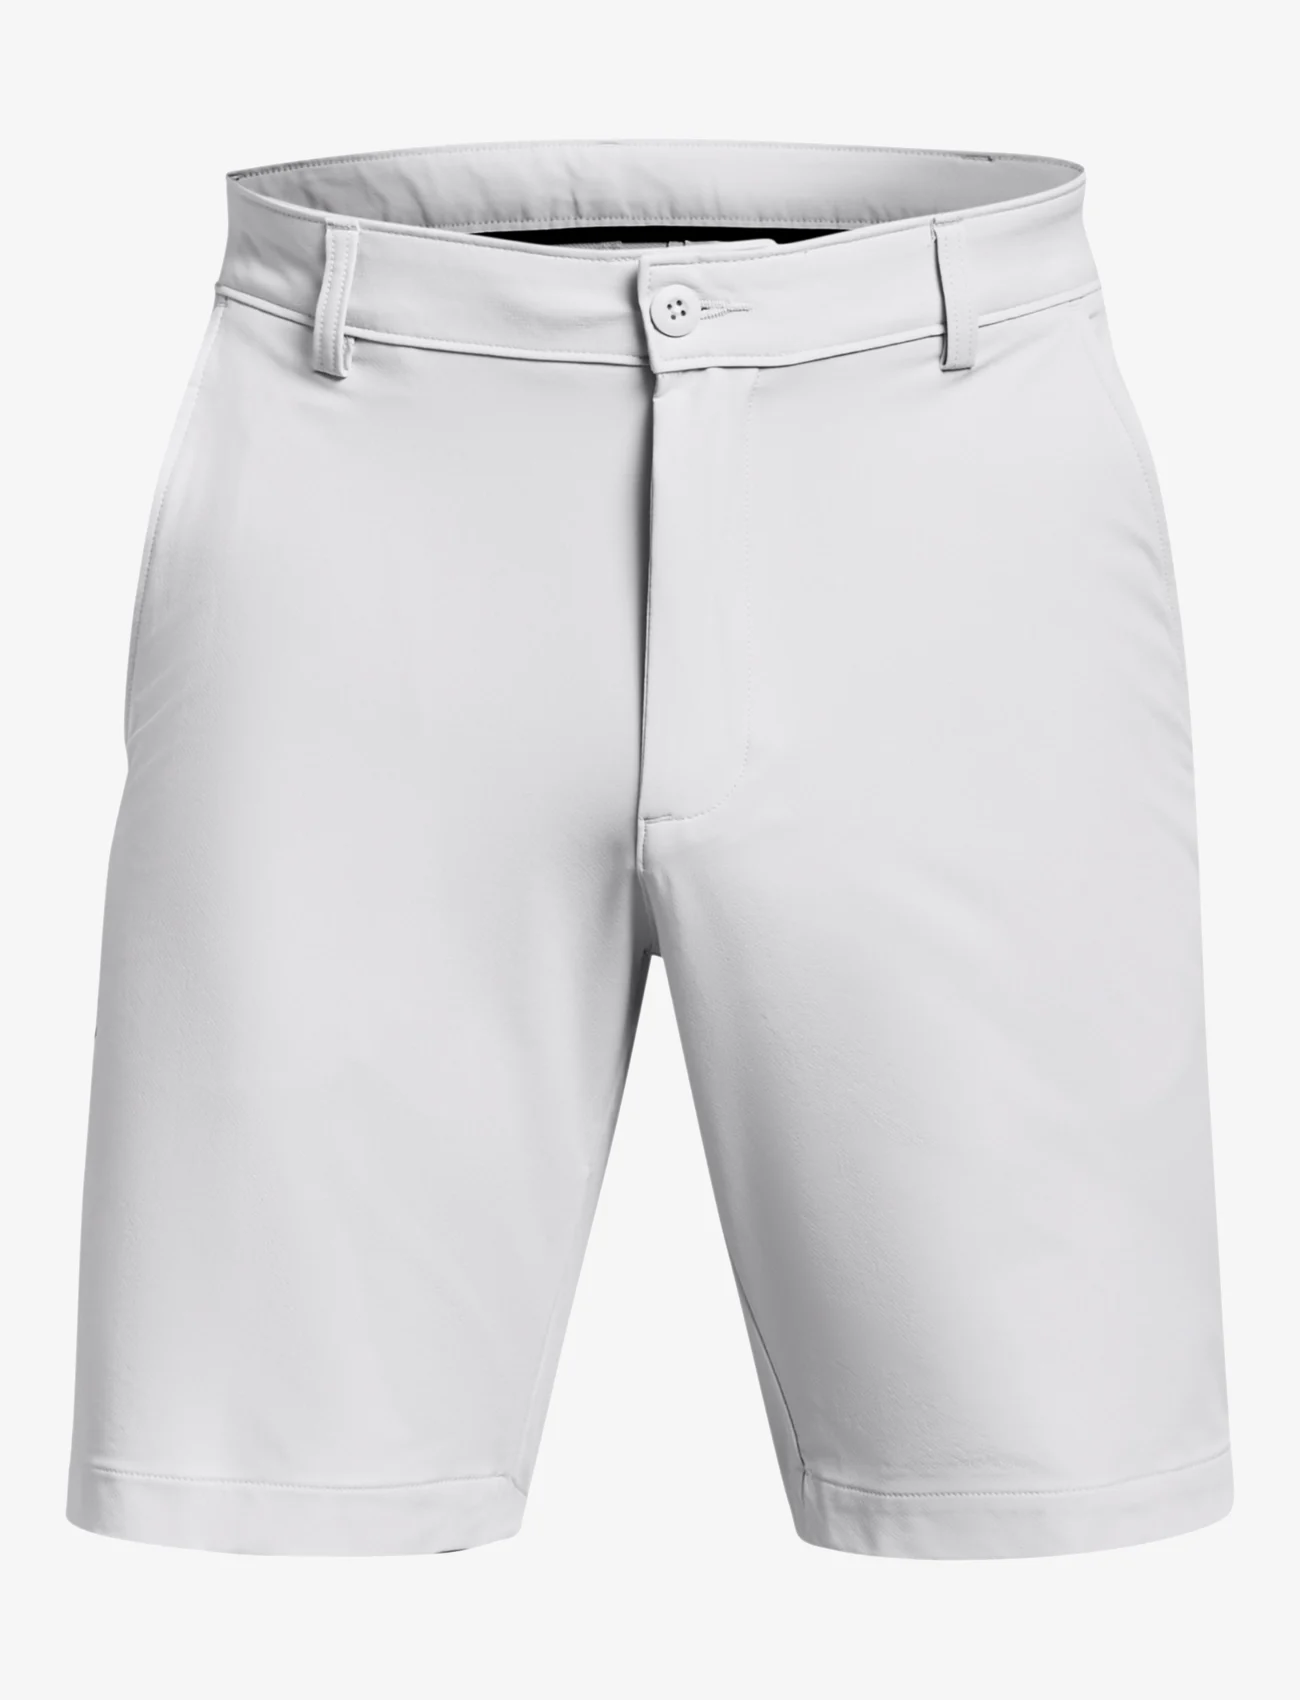 Under Armour - UA Tech Taper Short - sports shorts - gray - 0